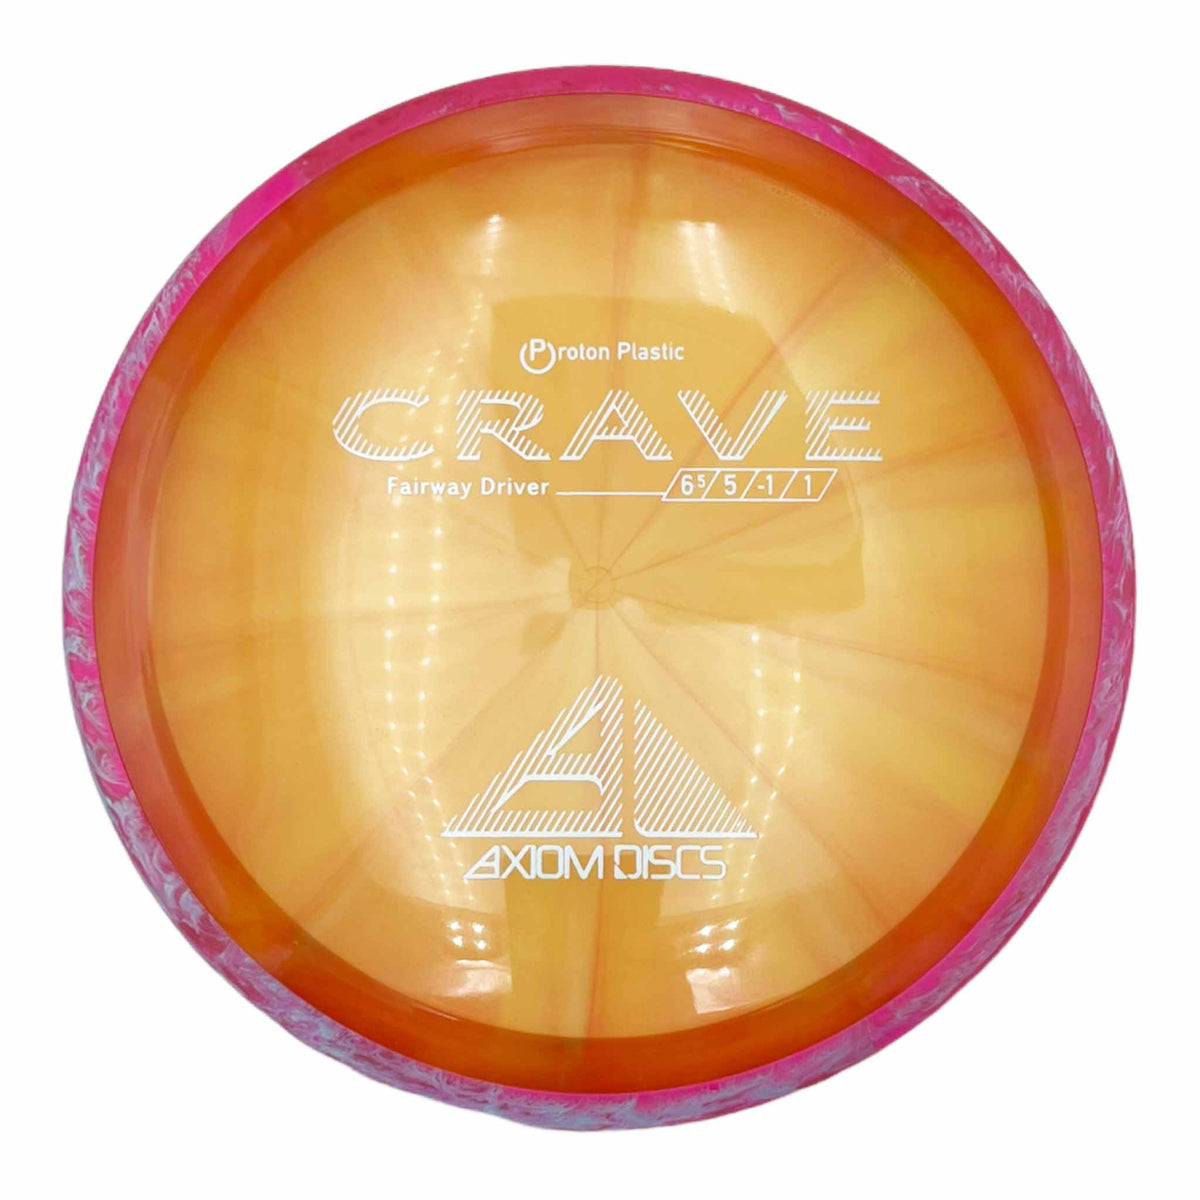 Axiom Discs Proton Crave fairway driver